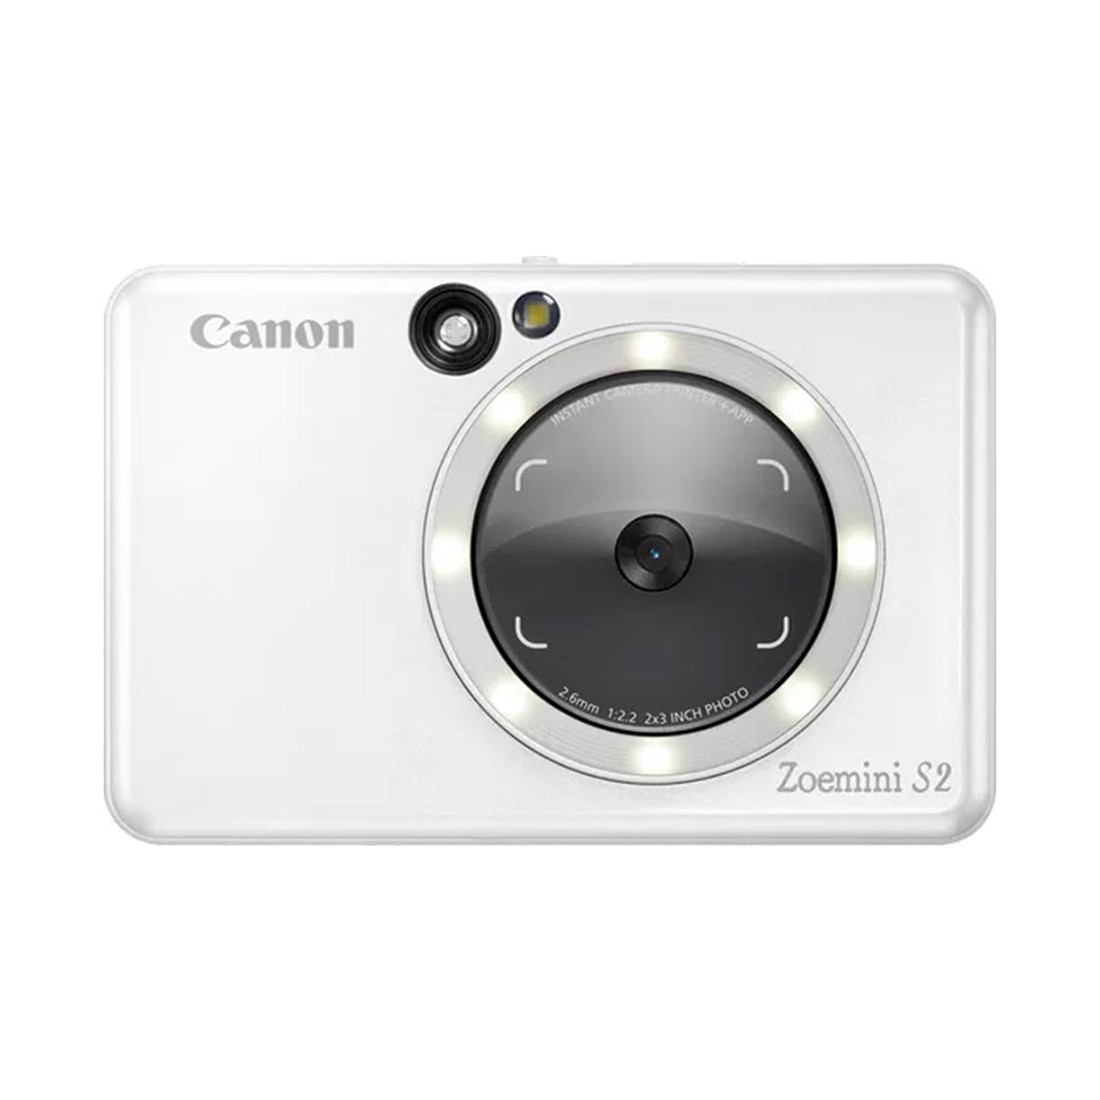 Canon Zoemini S2 (Жемчужно-белый) - моментальный фотоаппарат